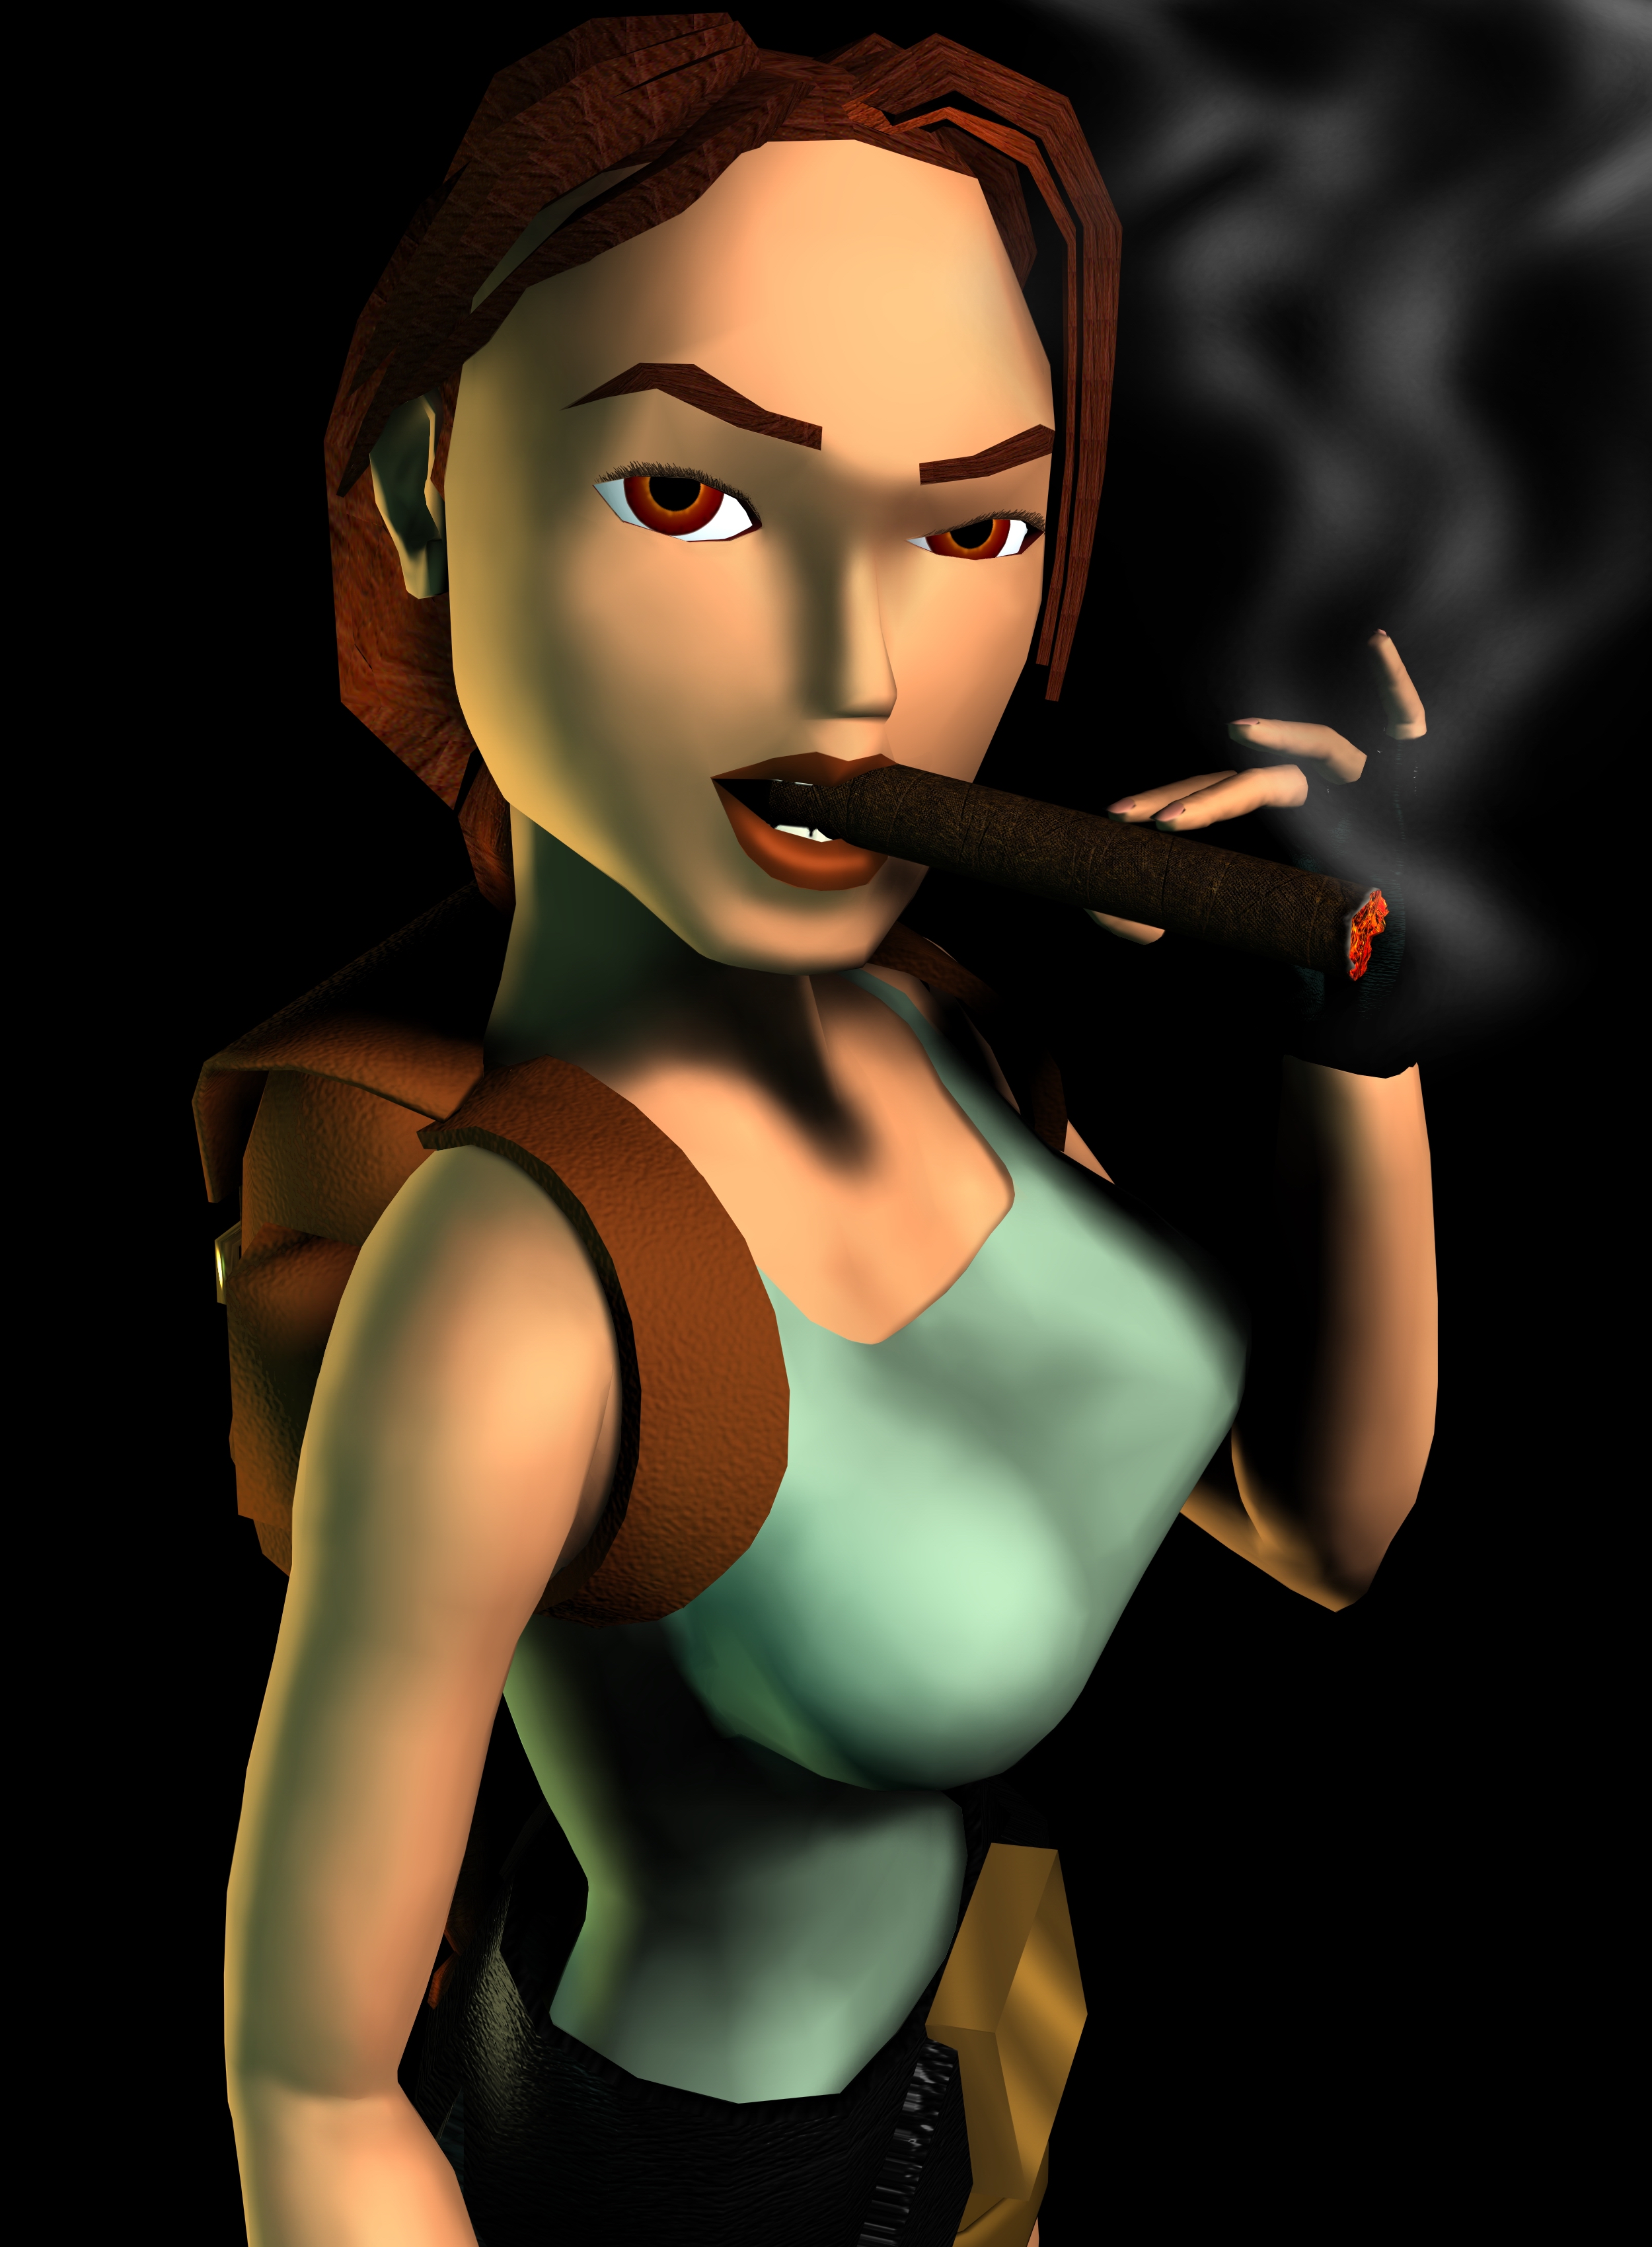 Tomb Raider Three The Adventures Of Lara Croft 1998 Picture Gallery